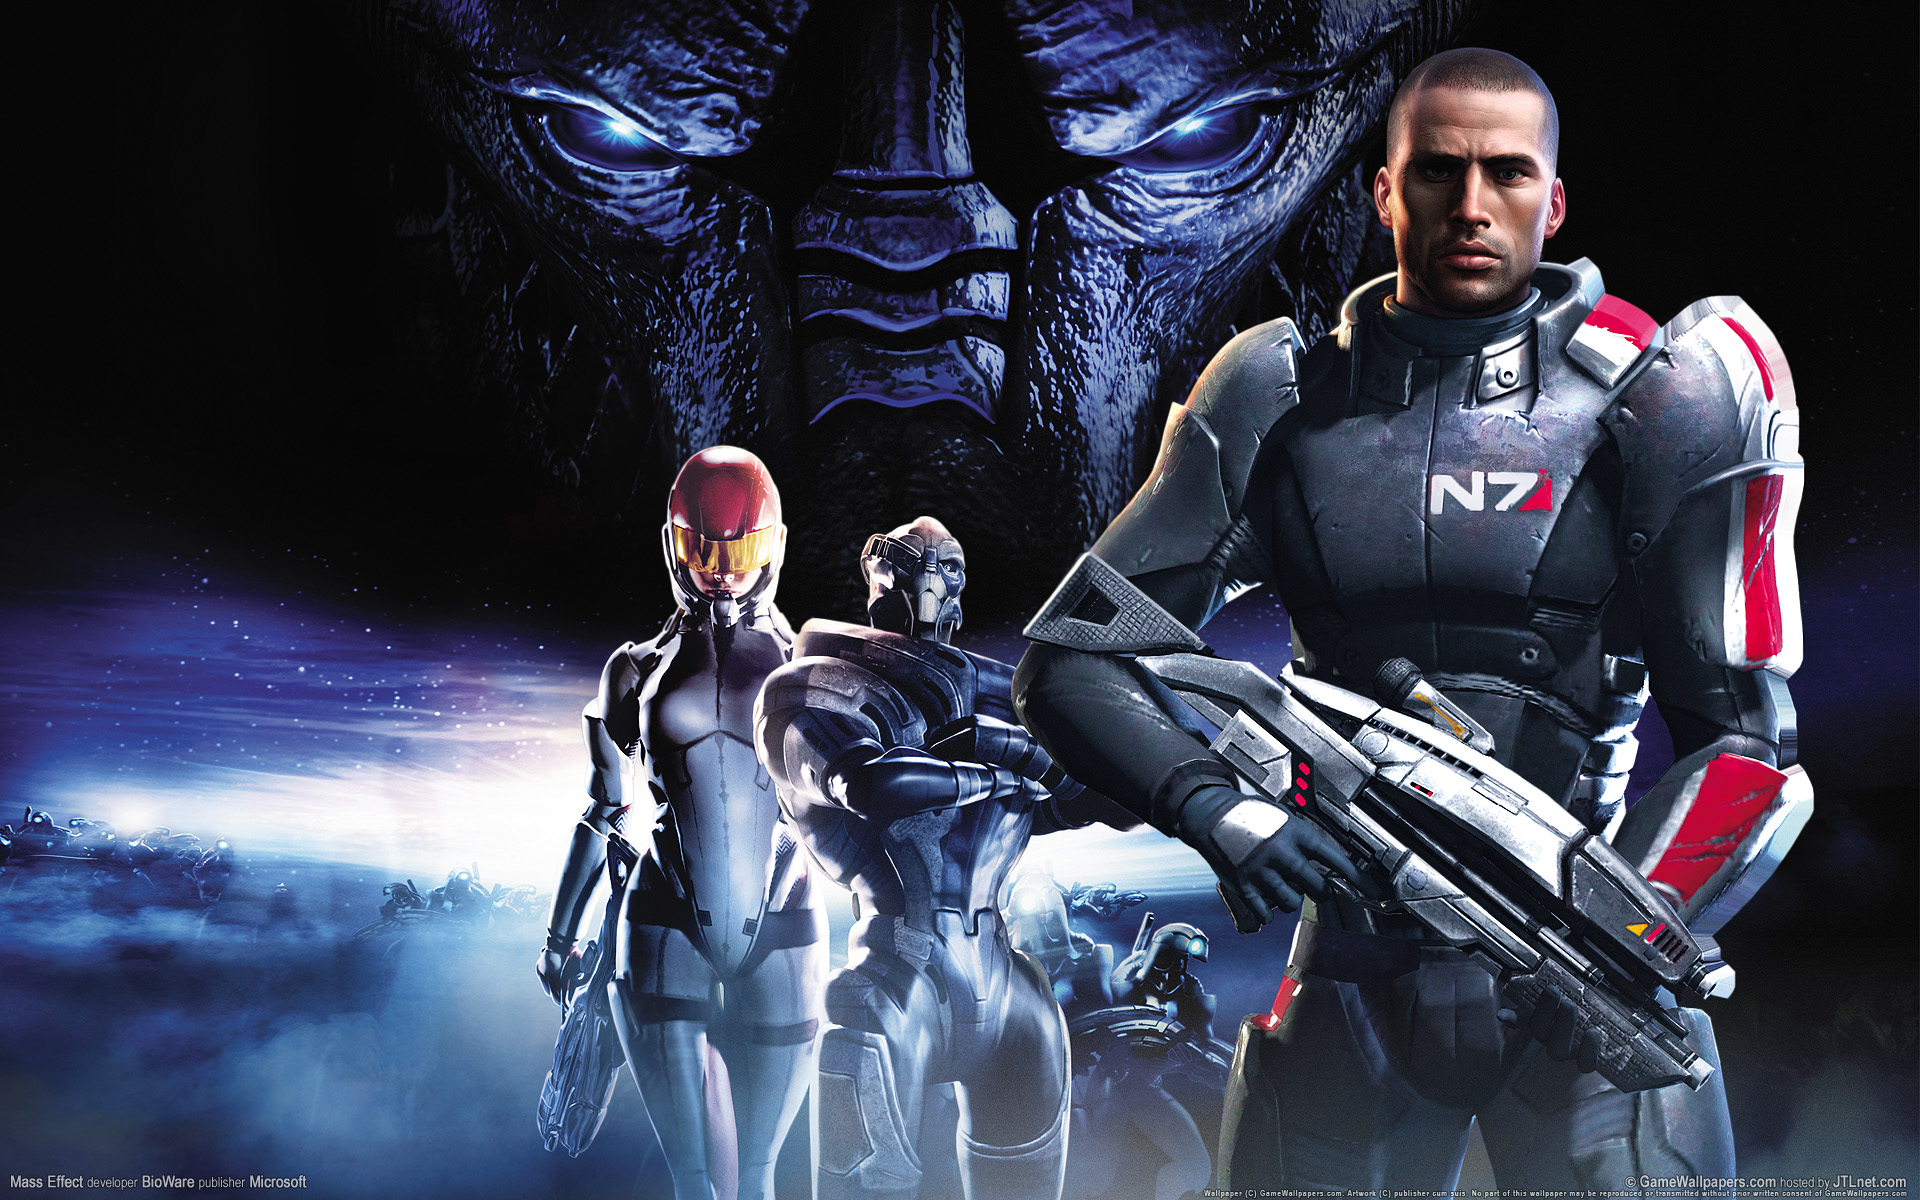 Mass Effect, BioWare, N7, Garrus Vakarian, Commander Shepard, Ashley Williams - desktop wallpaper